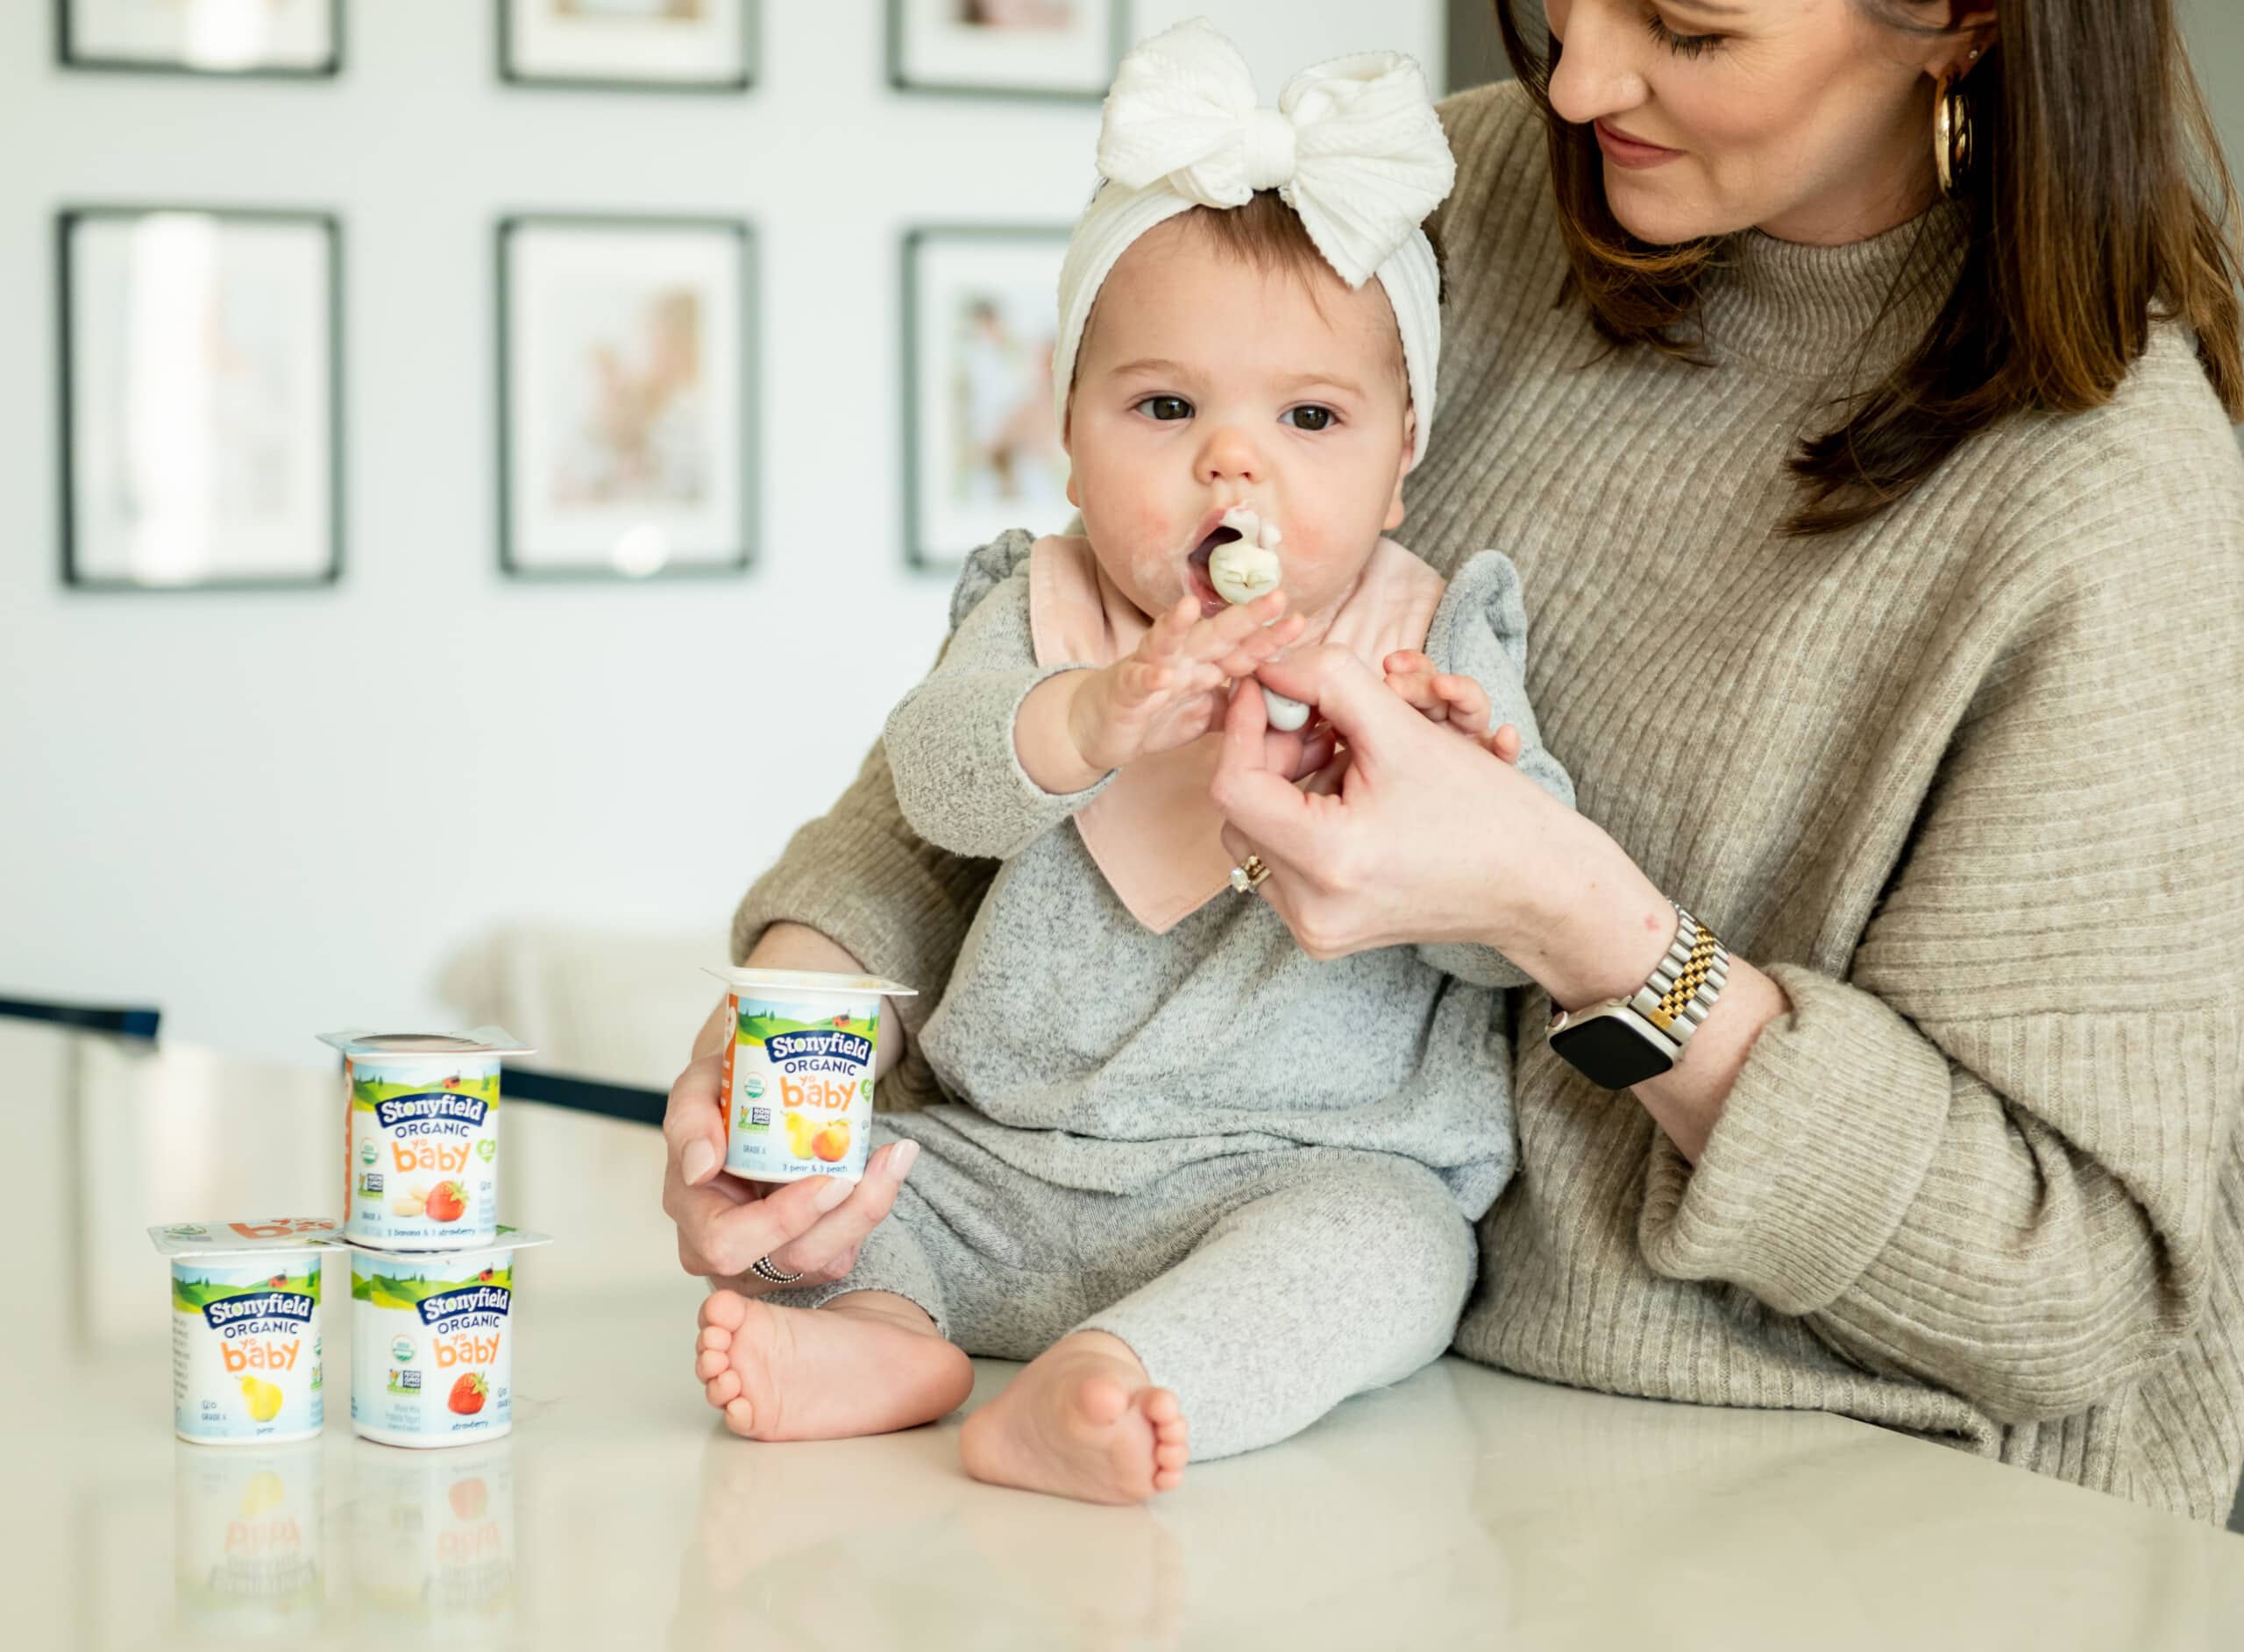 Introducing New Foods to Baby With Yogurt Feeding Hacks